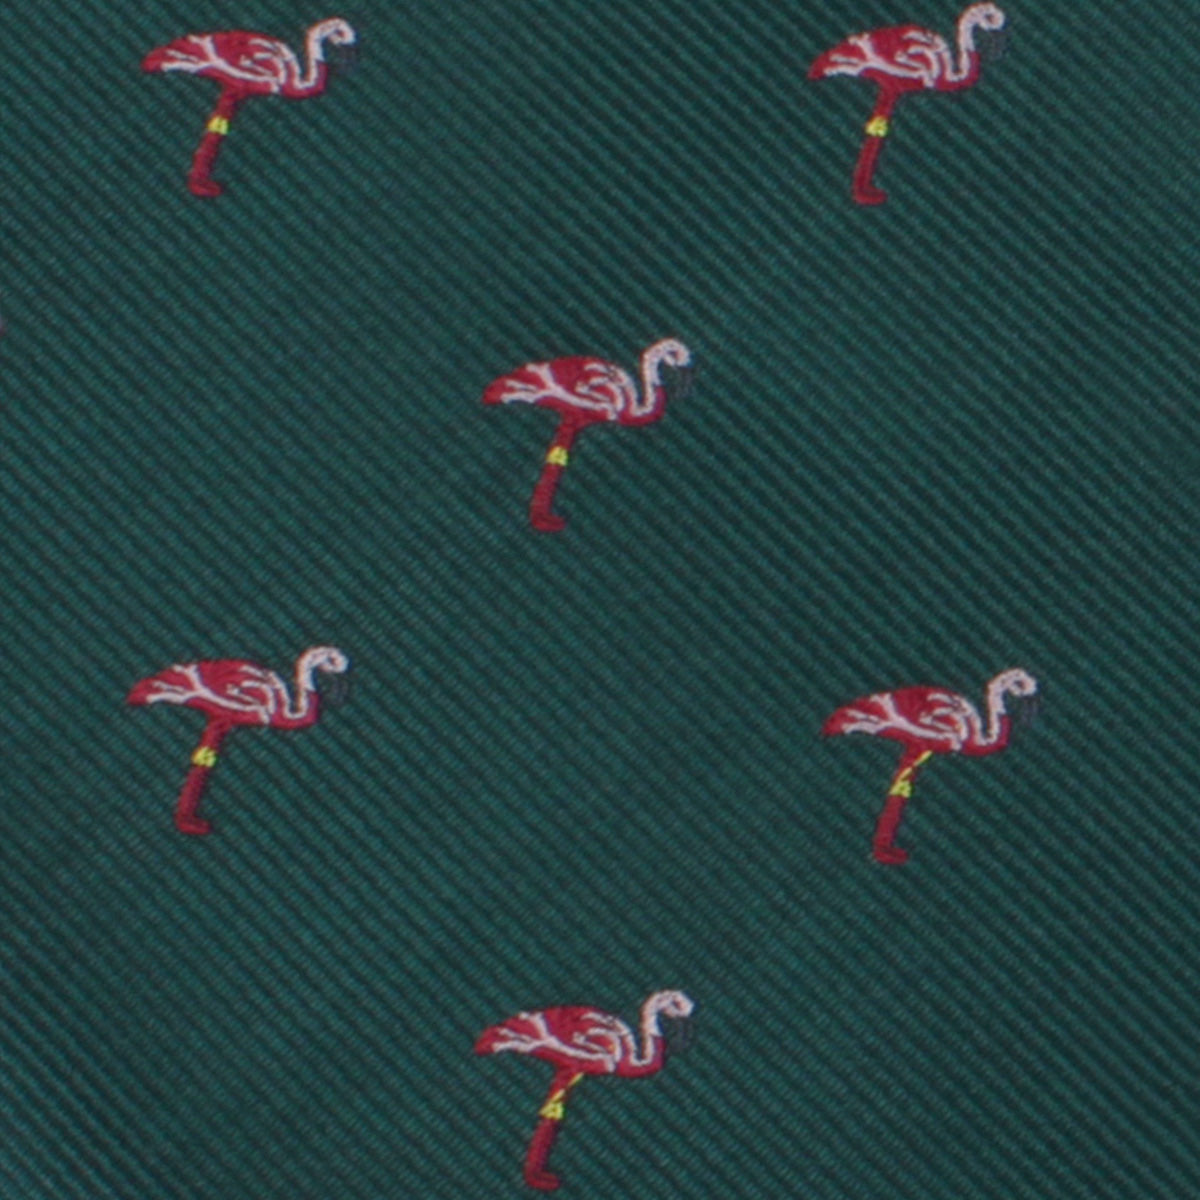 Caribbean Royal Green Flamingo Necktie Fabric